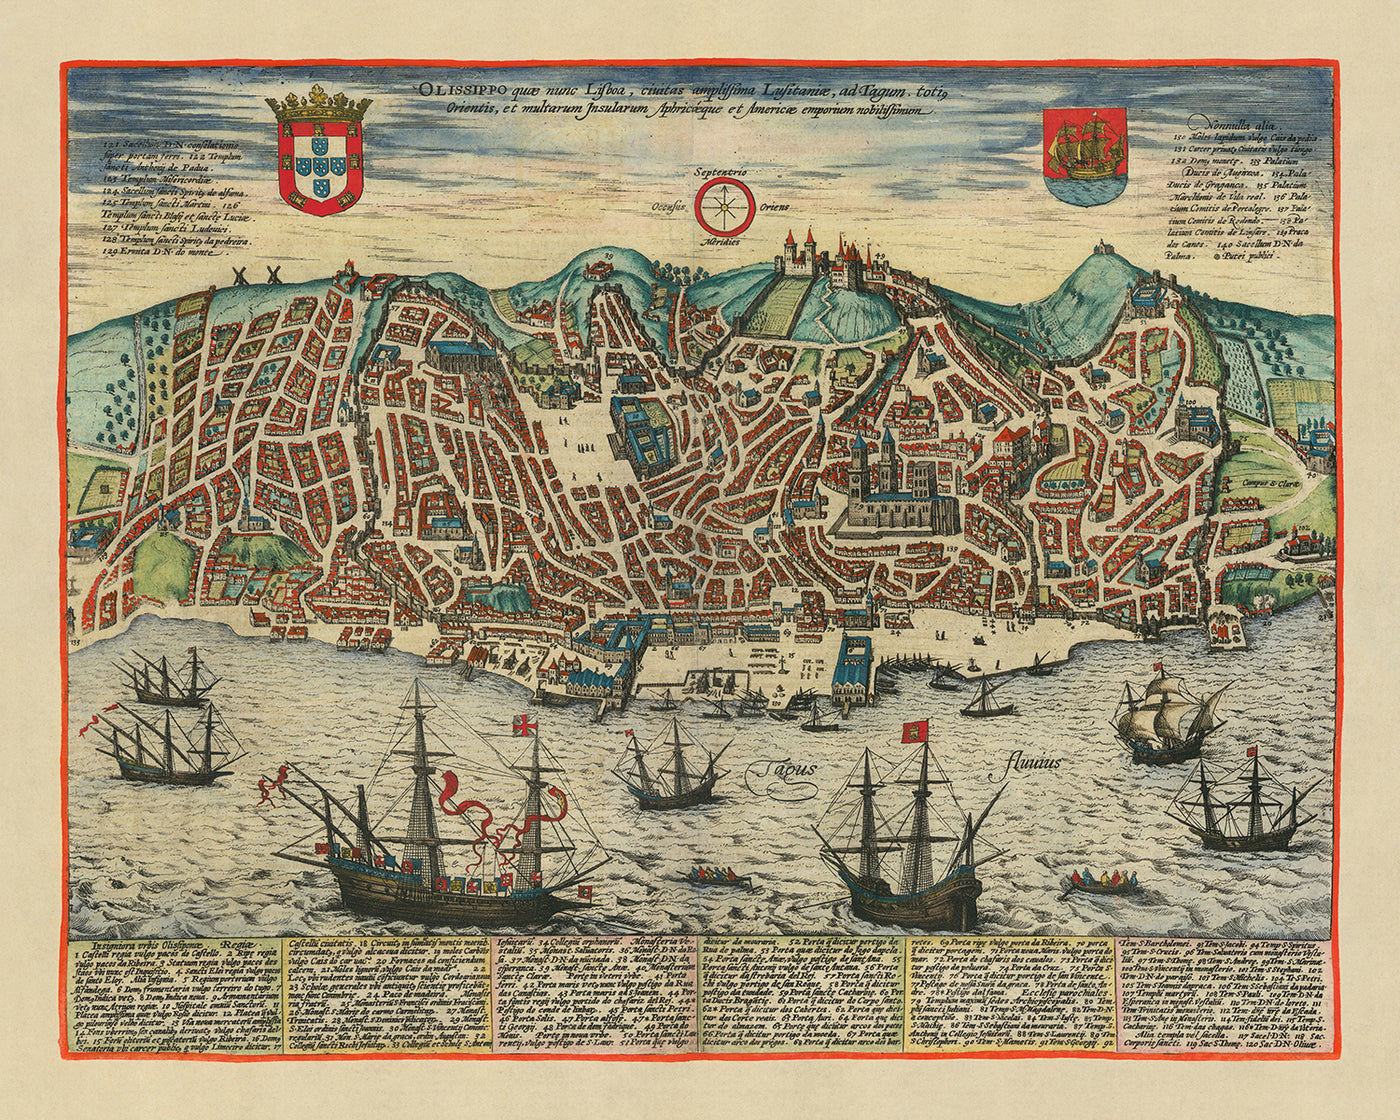 Old Birdseye Map of Lisbon by Braun, 1596: Castelo de São Jorge, Catedral Se, Baixa, Bairro Alto, Tagus River